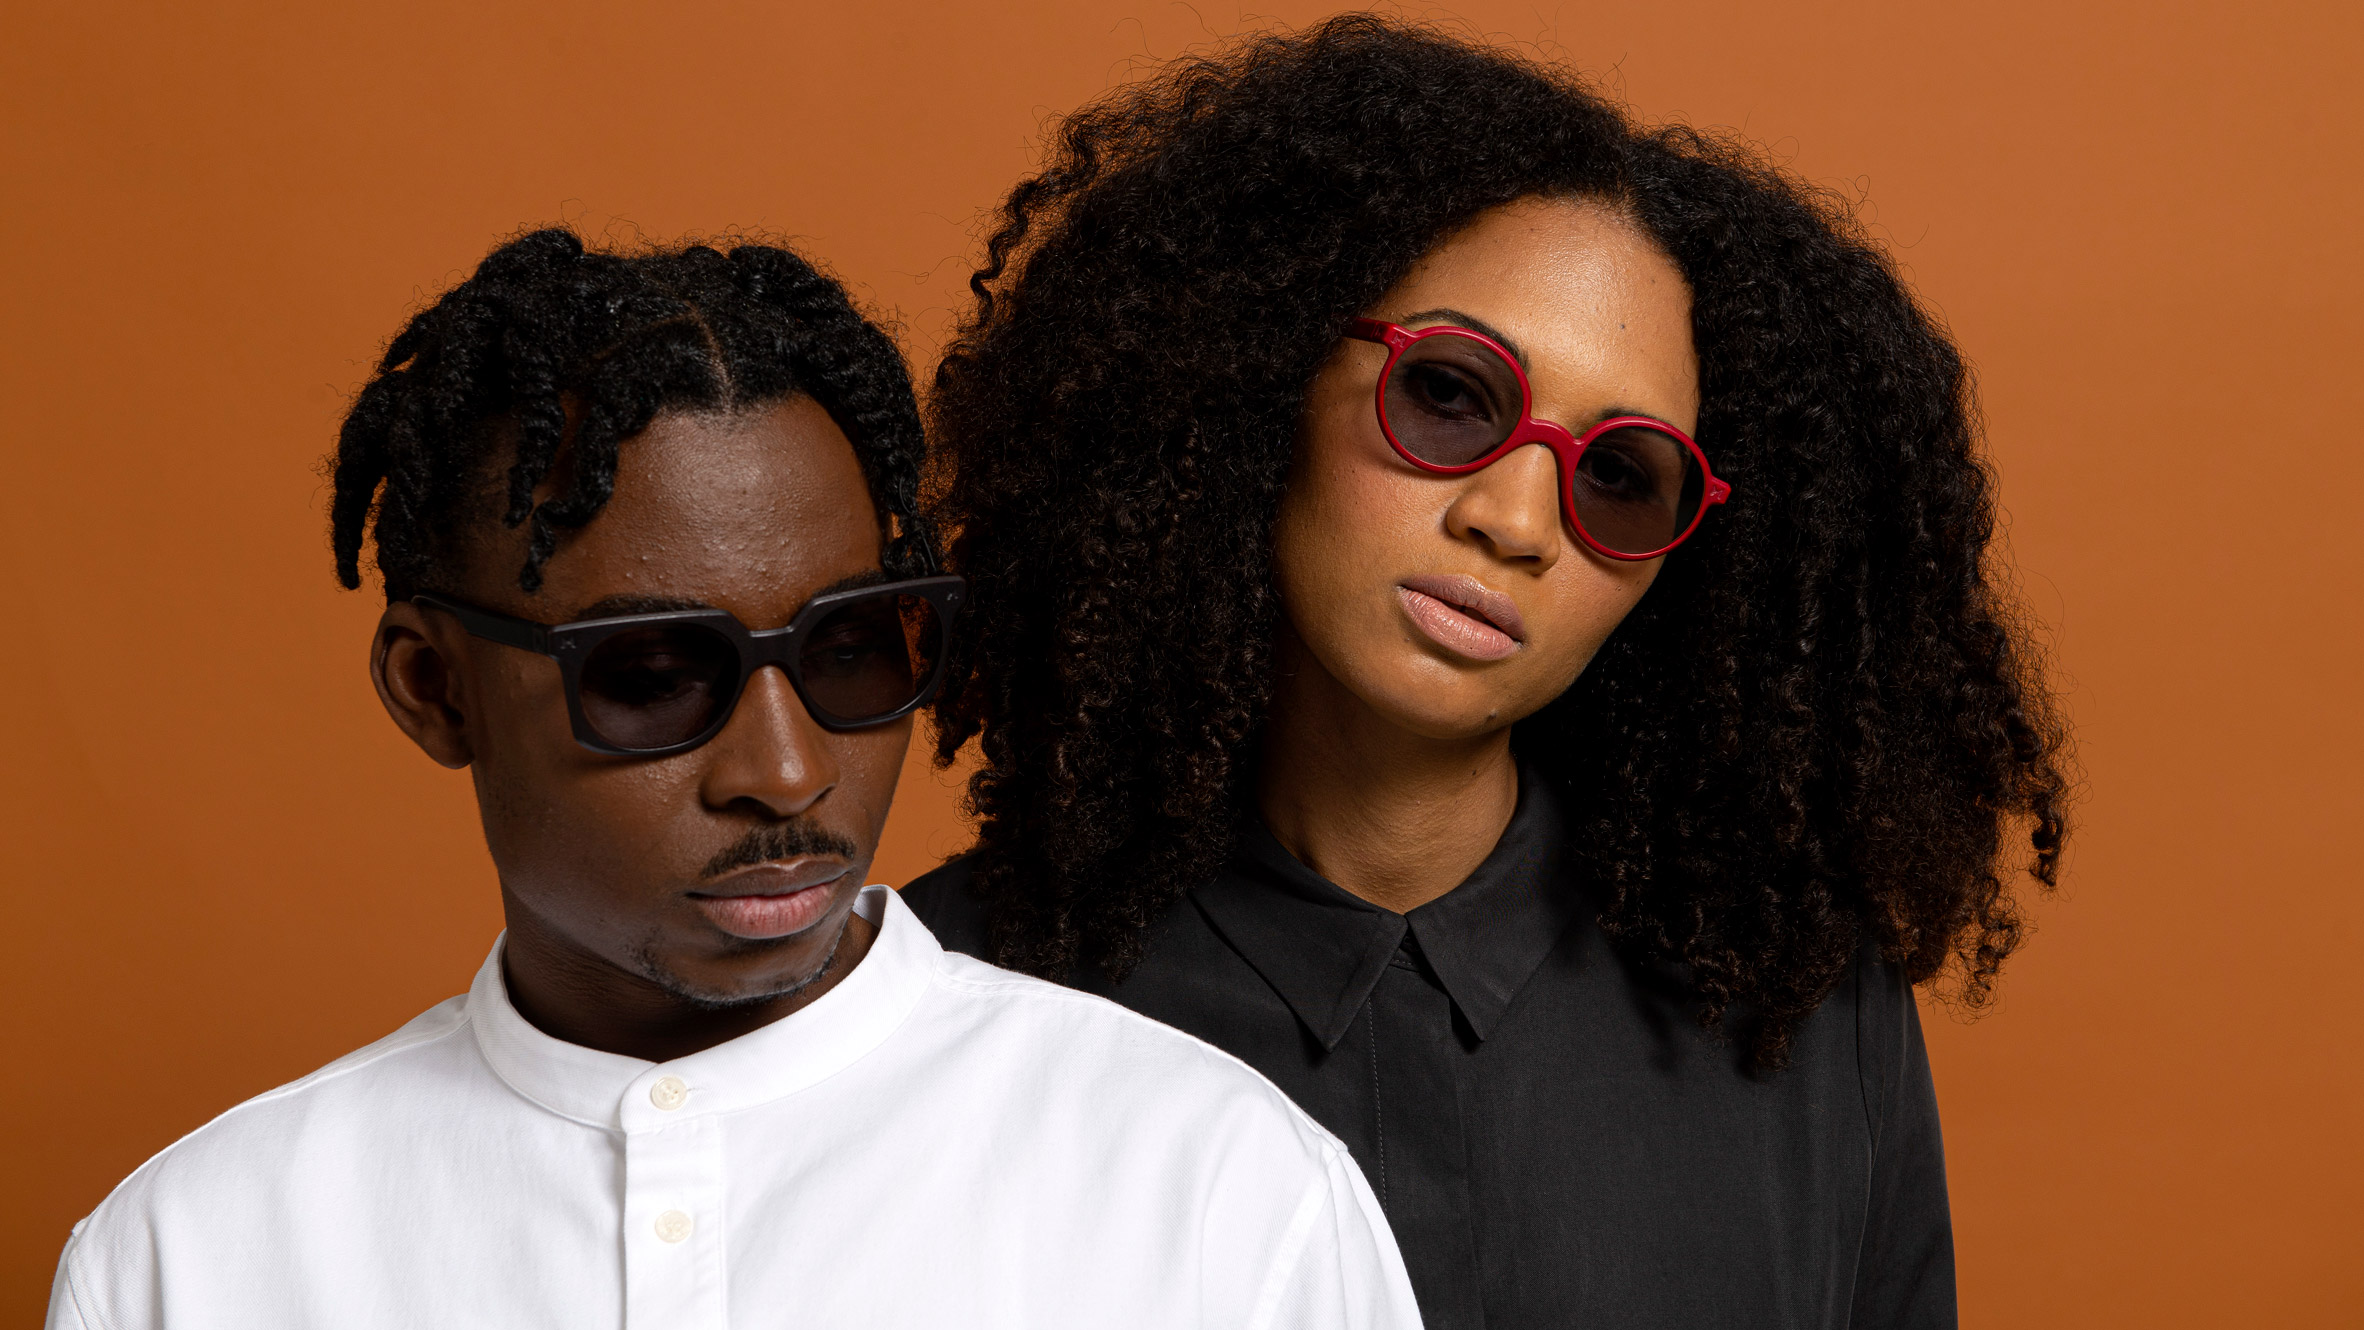 Reframd creates "Afropolitan" sunglasses designed to fit black faces